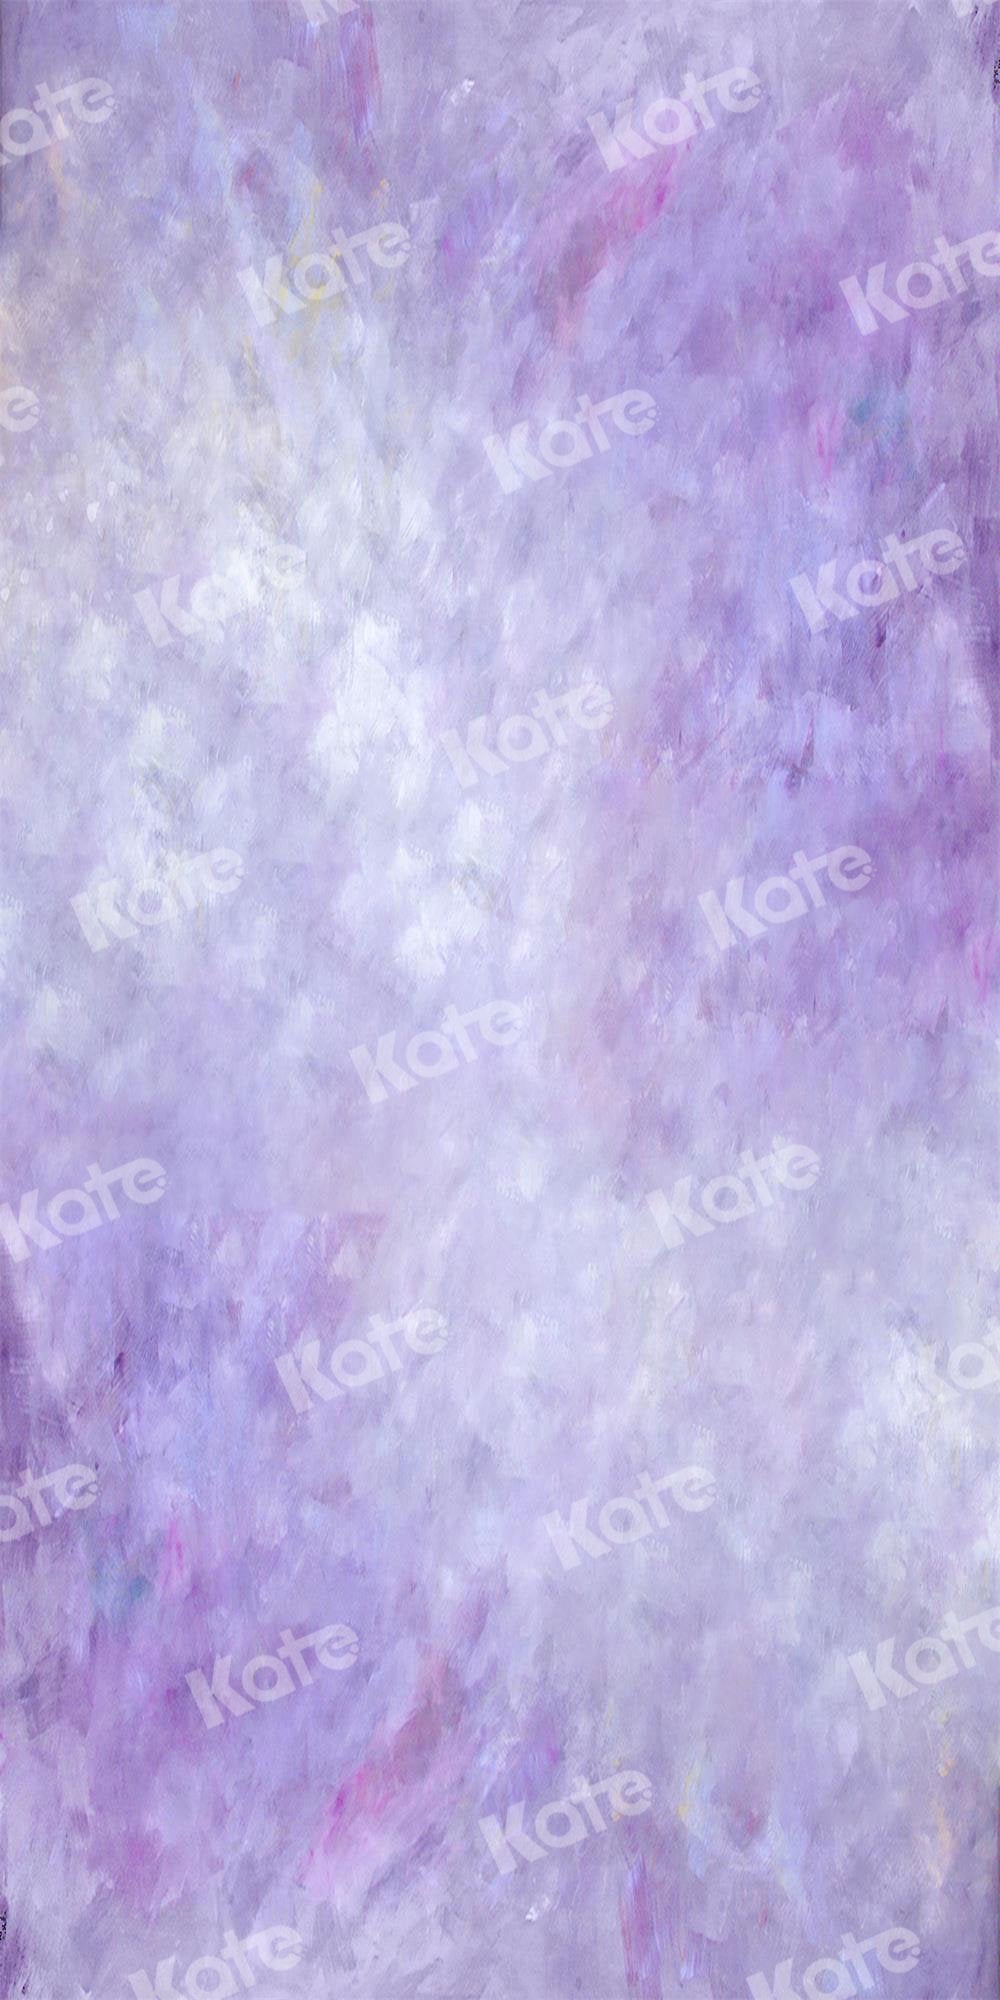 kateファインアート紫の背景写真撮影のための抽象的なテクスチャ